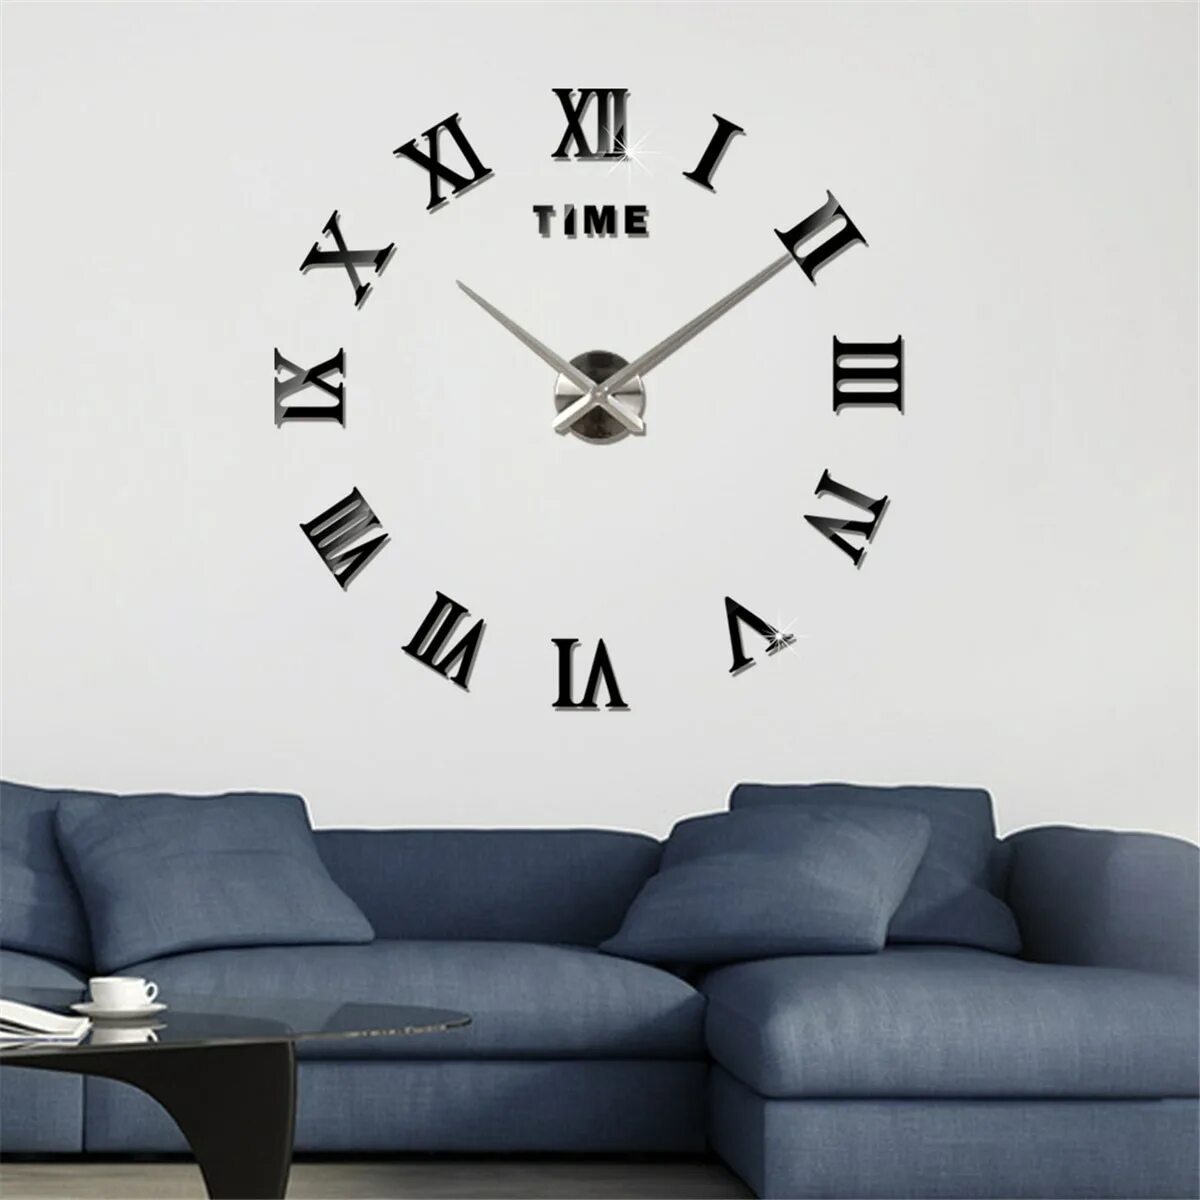 Сделай часы тусклее. "Часы ""римские цифры"" 3d Silver" 1234. Часы настенные DIY Clock 3d. Часы настенные "римские цифры". Римские часы настенные.